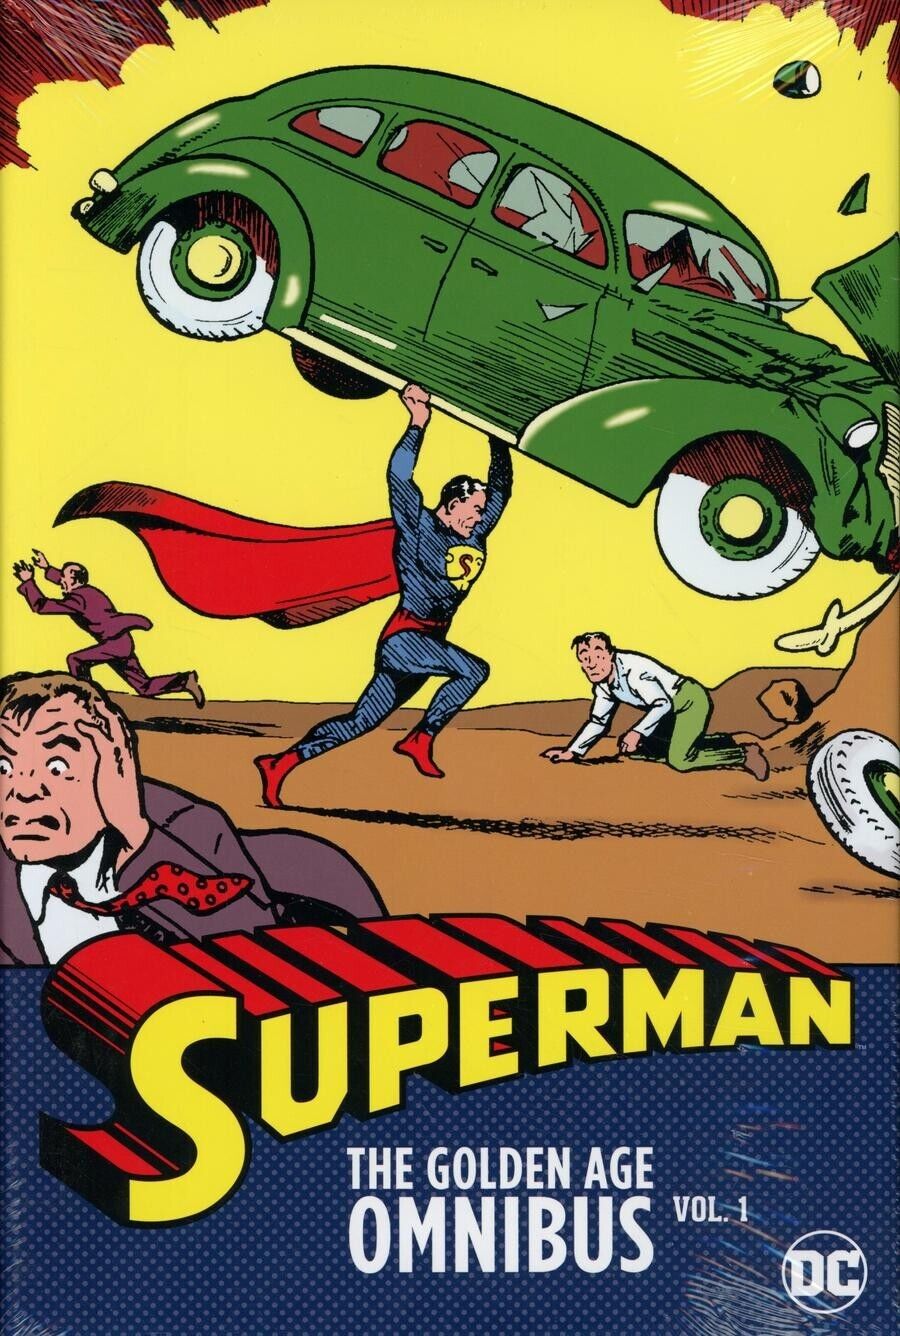 Superman Vol #1  *Golden Age Omnibus*  Brand New & Sealed Nostalgia